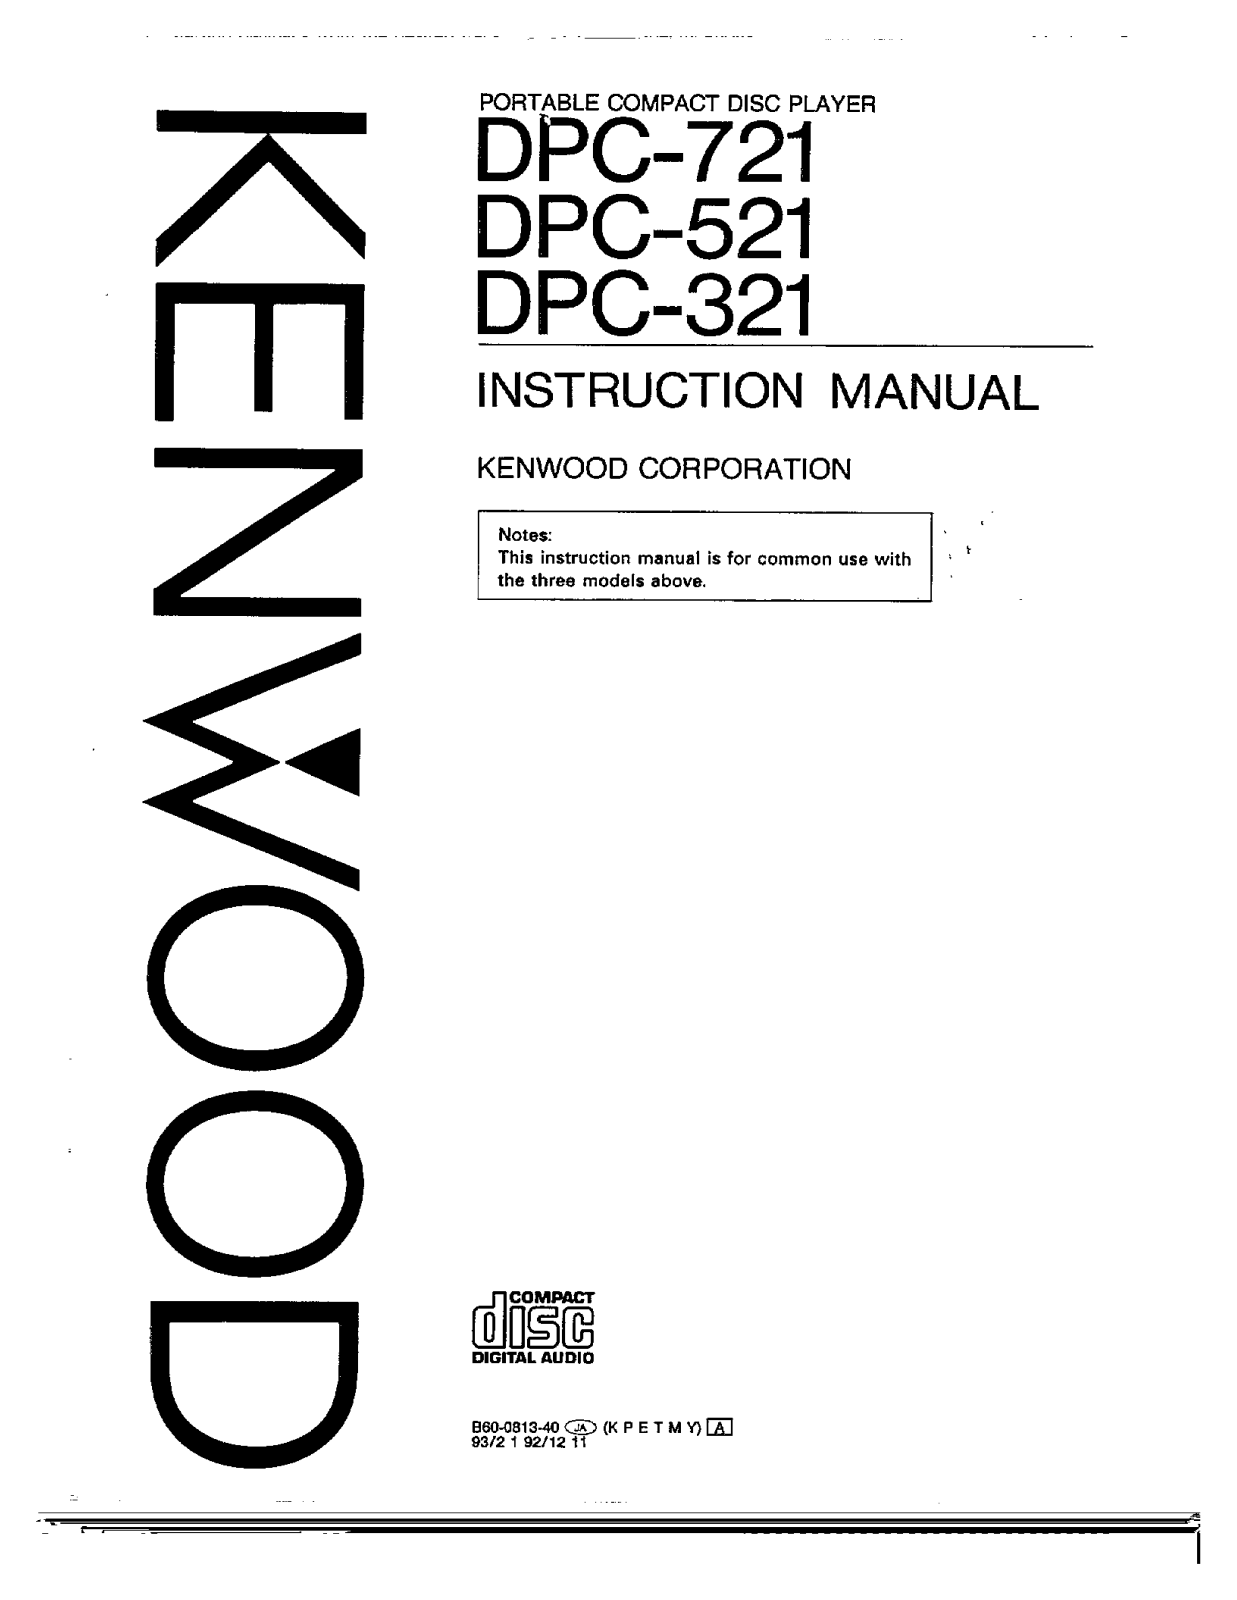 Kenwood DPC-721, DPC-521, DPC-321 Owner's Manual